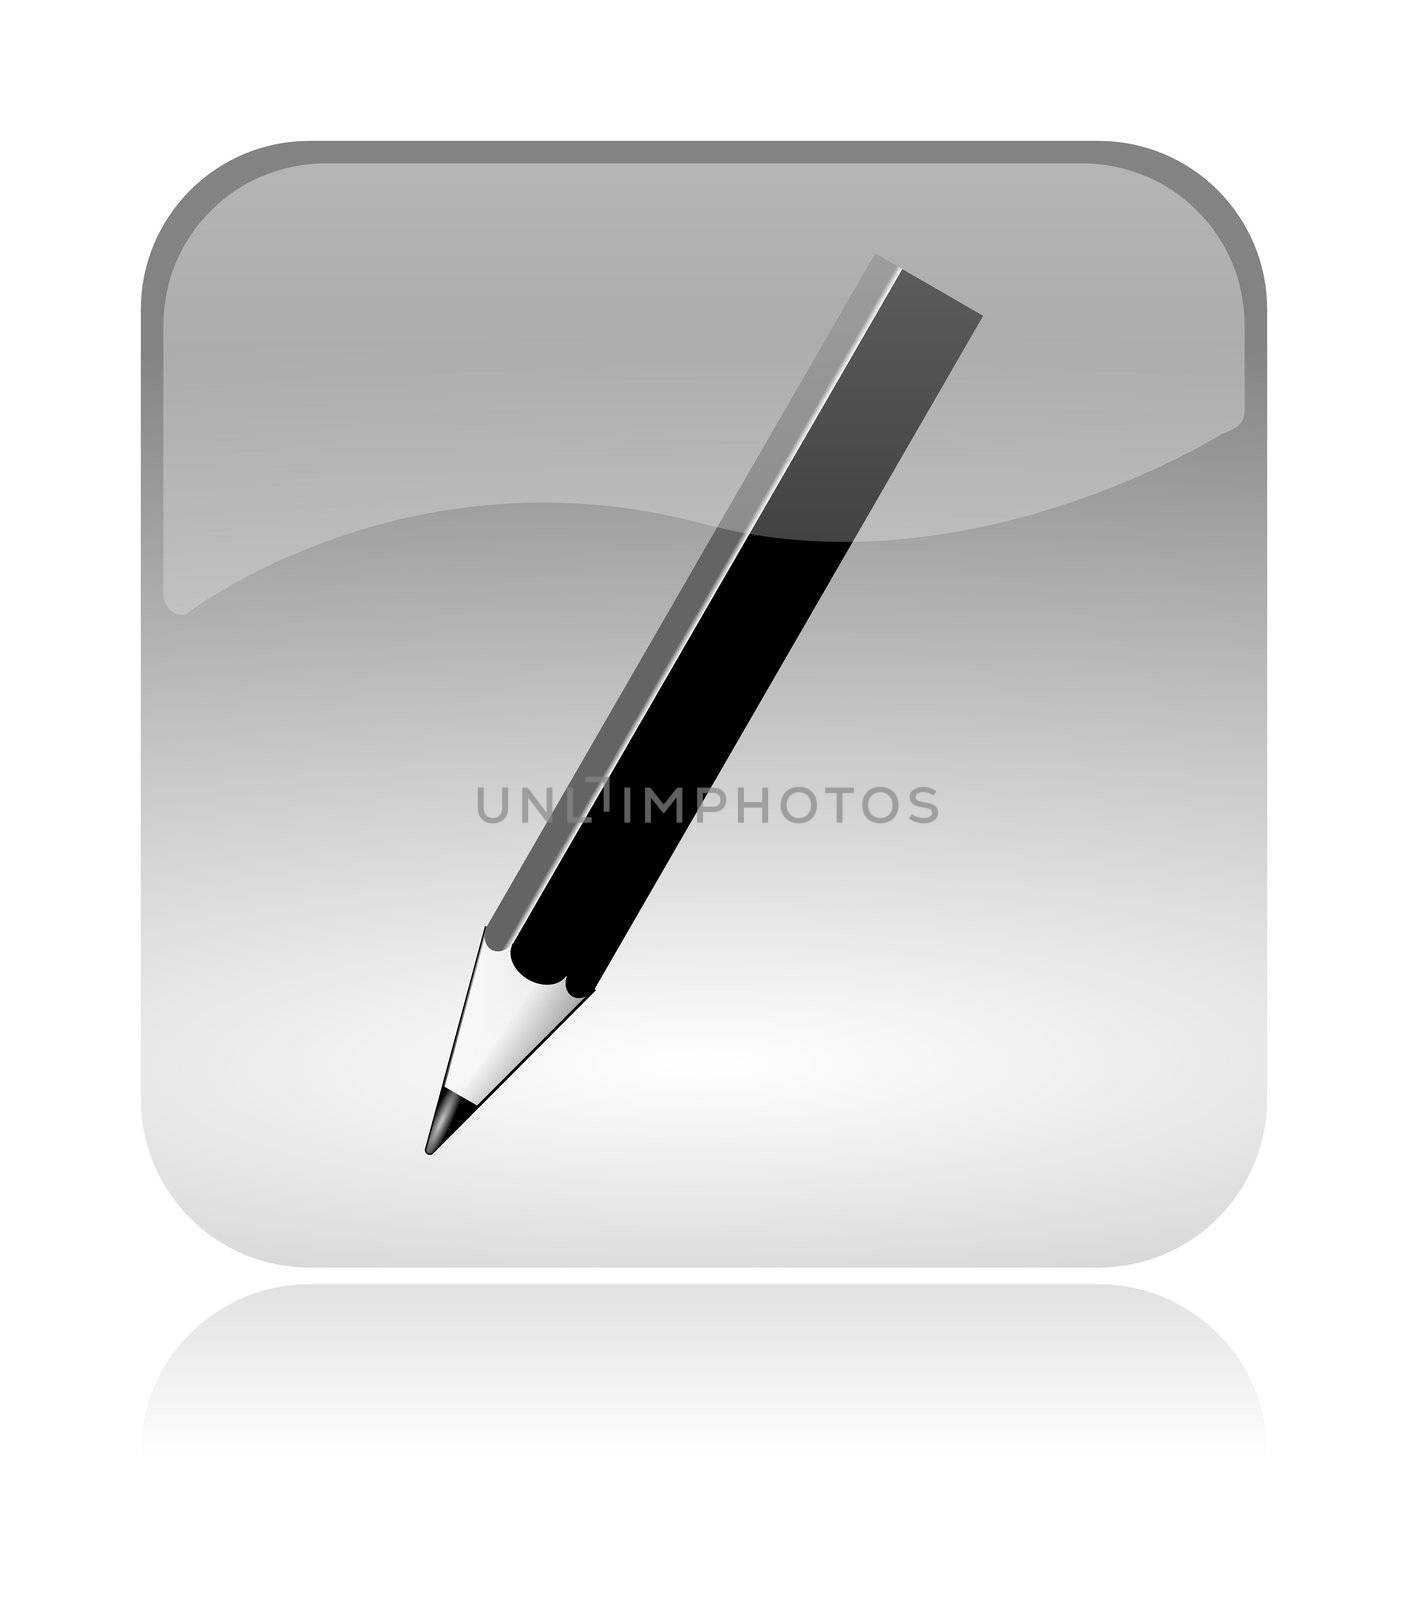 Pencil crayon web interface icon by make